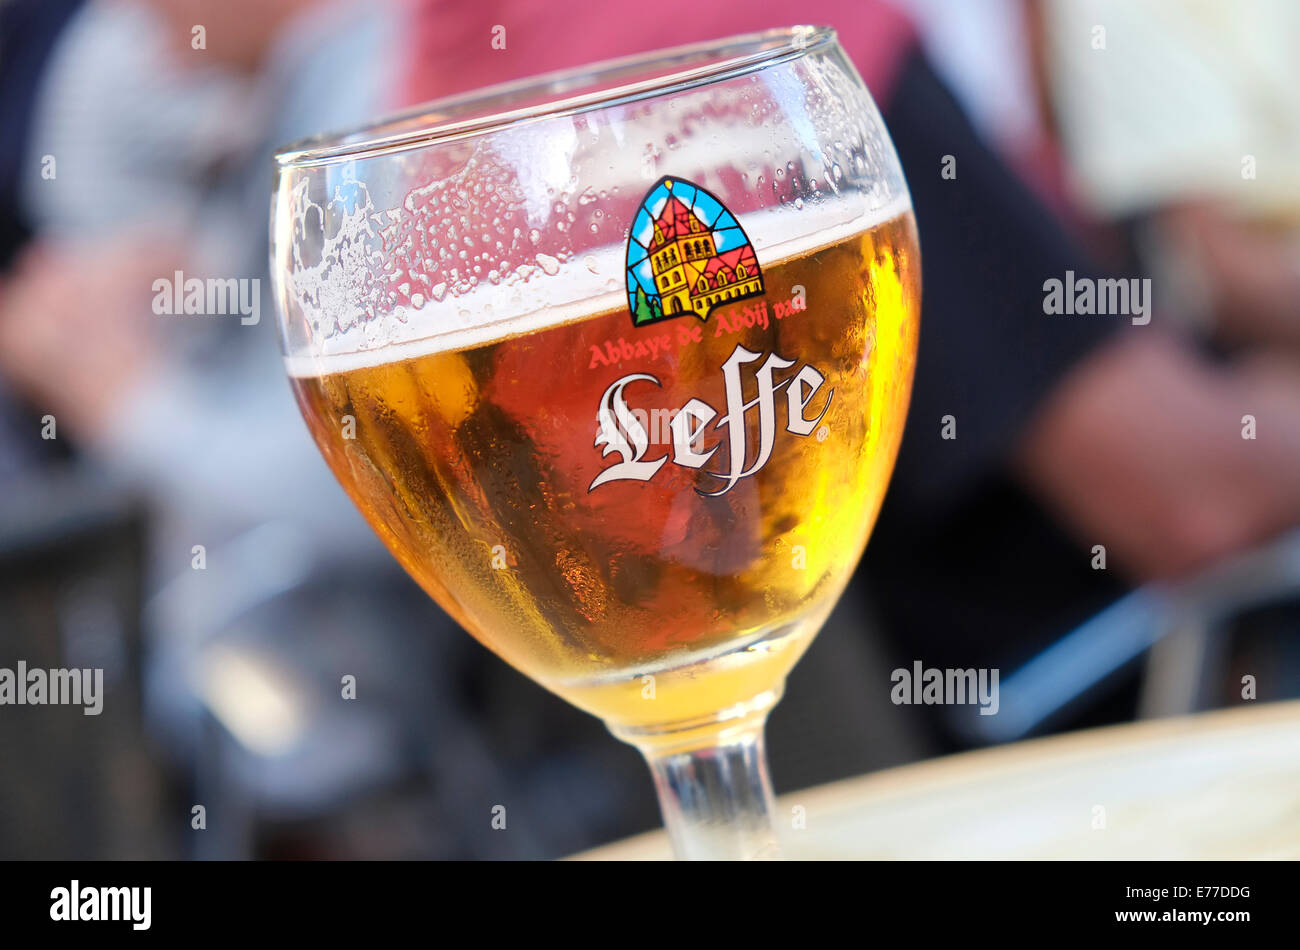 Leffe bicchiere da birra Foto stock - Alamy